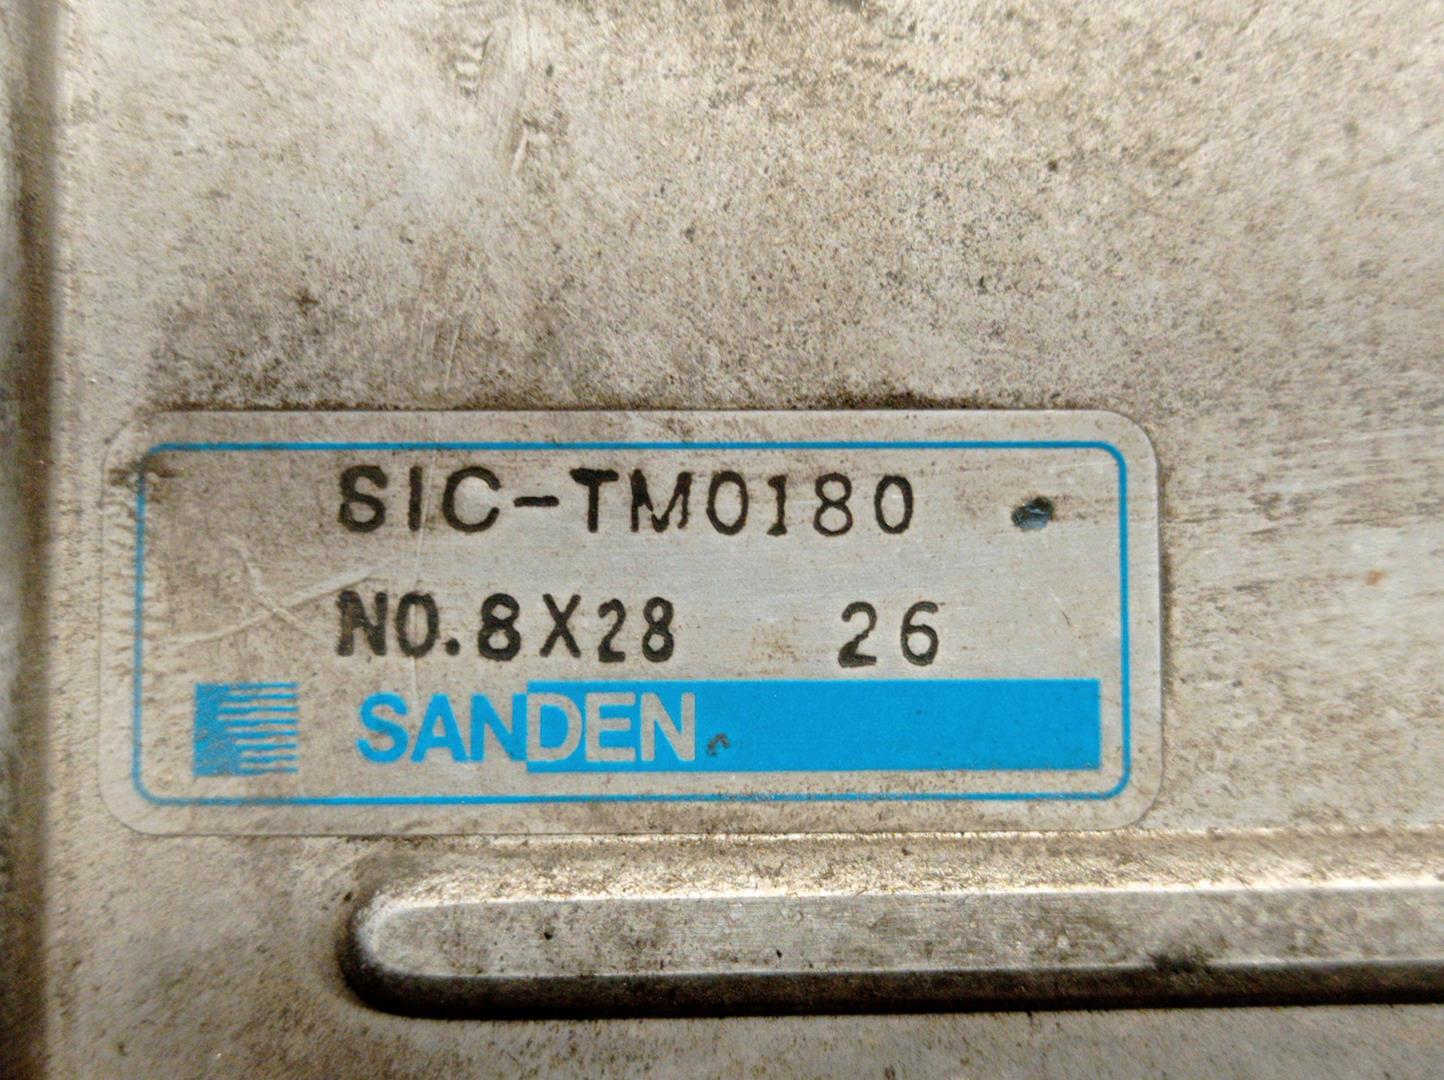 SUBARU Forester SH (2007-2013) Intercooler Radiator 21821AA051, SICTM0180, SANDEN 24550746